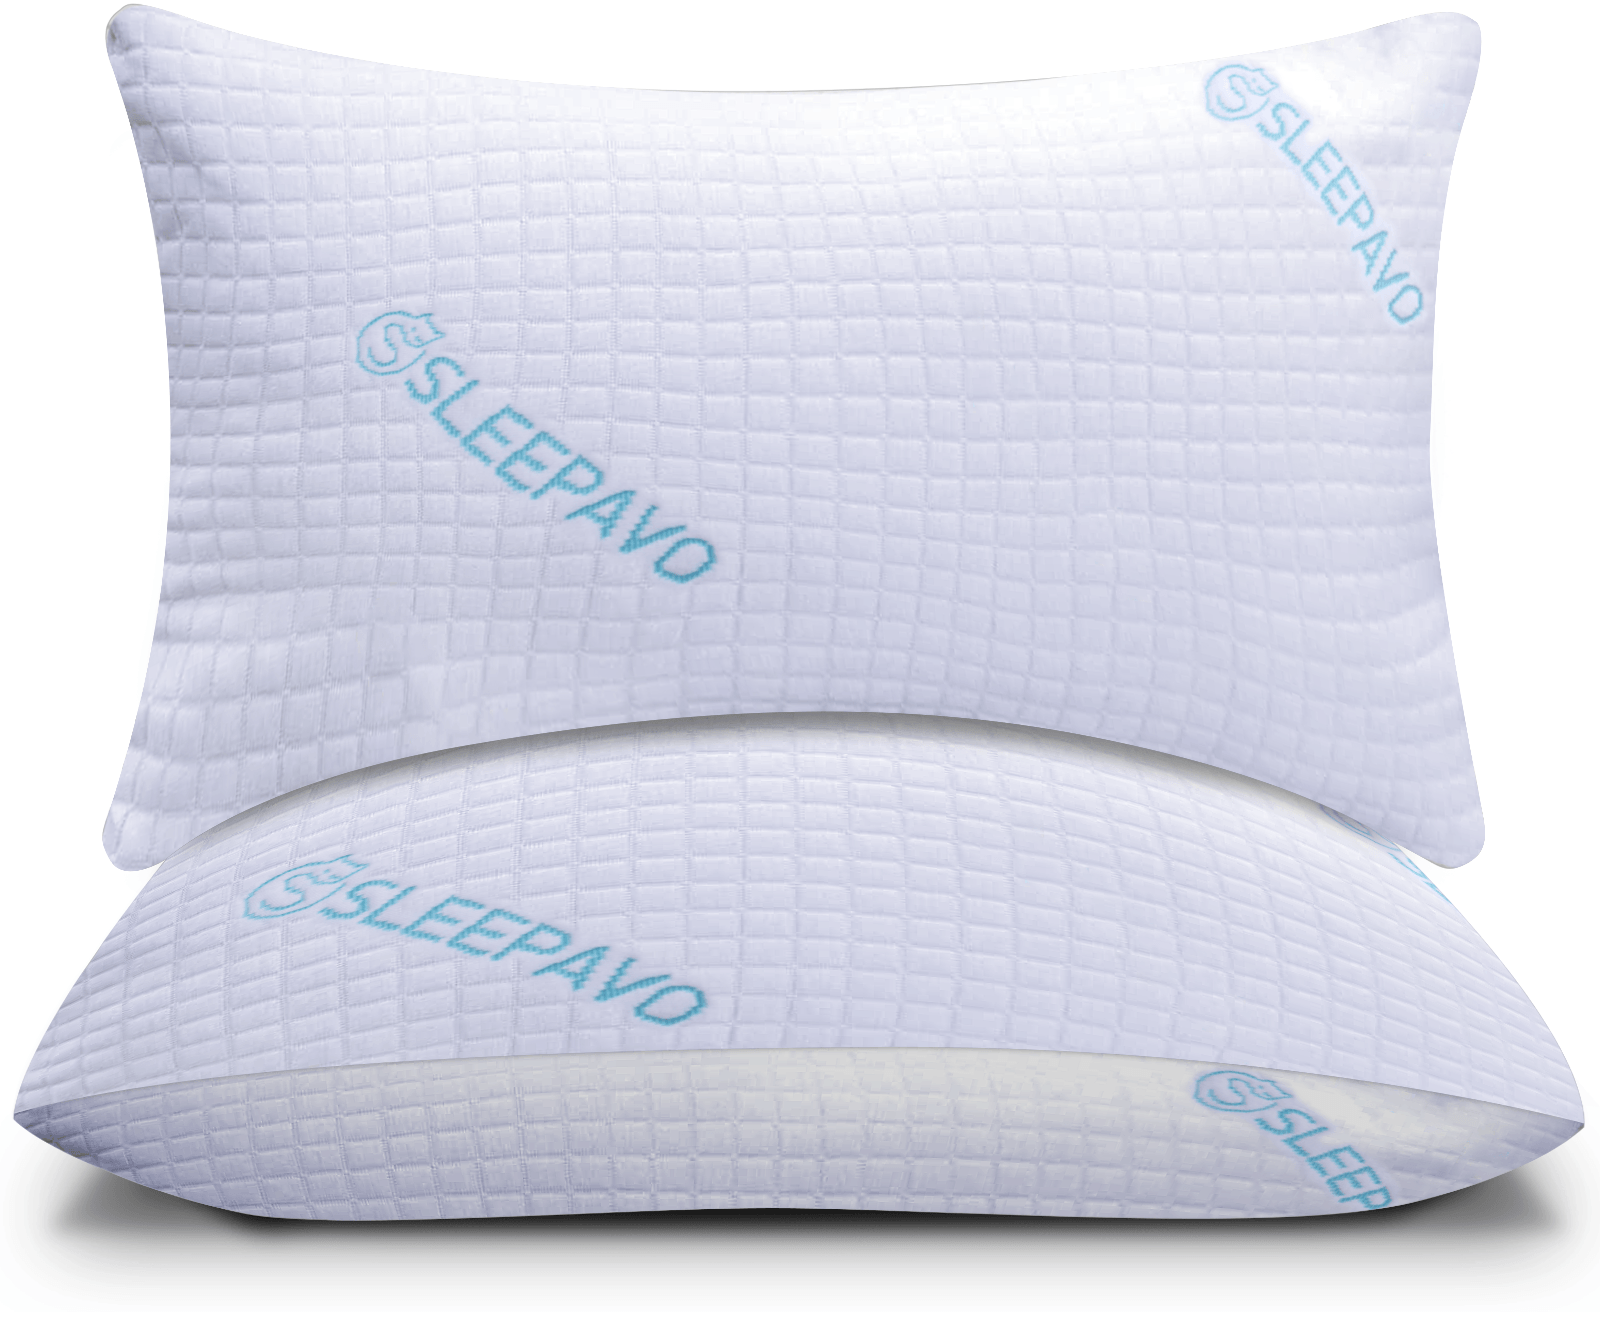 Deluxe Shredded Memory Foam Pillows 2-Pack (Queen Size) - Sleepavo